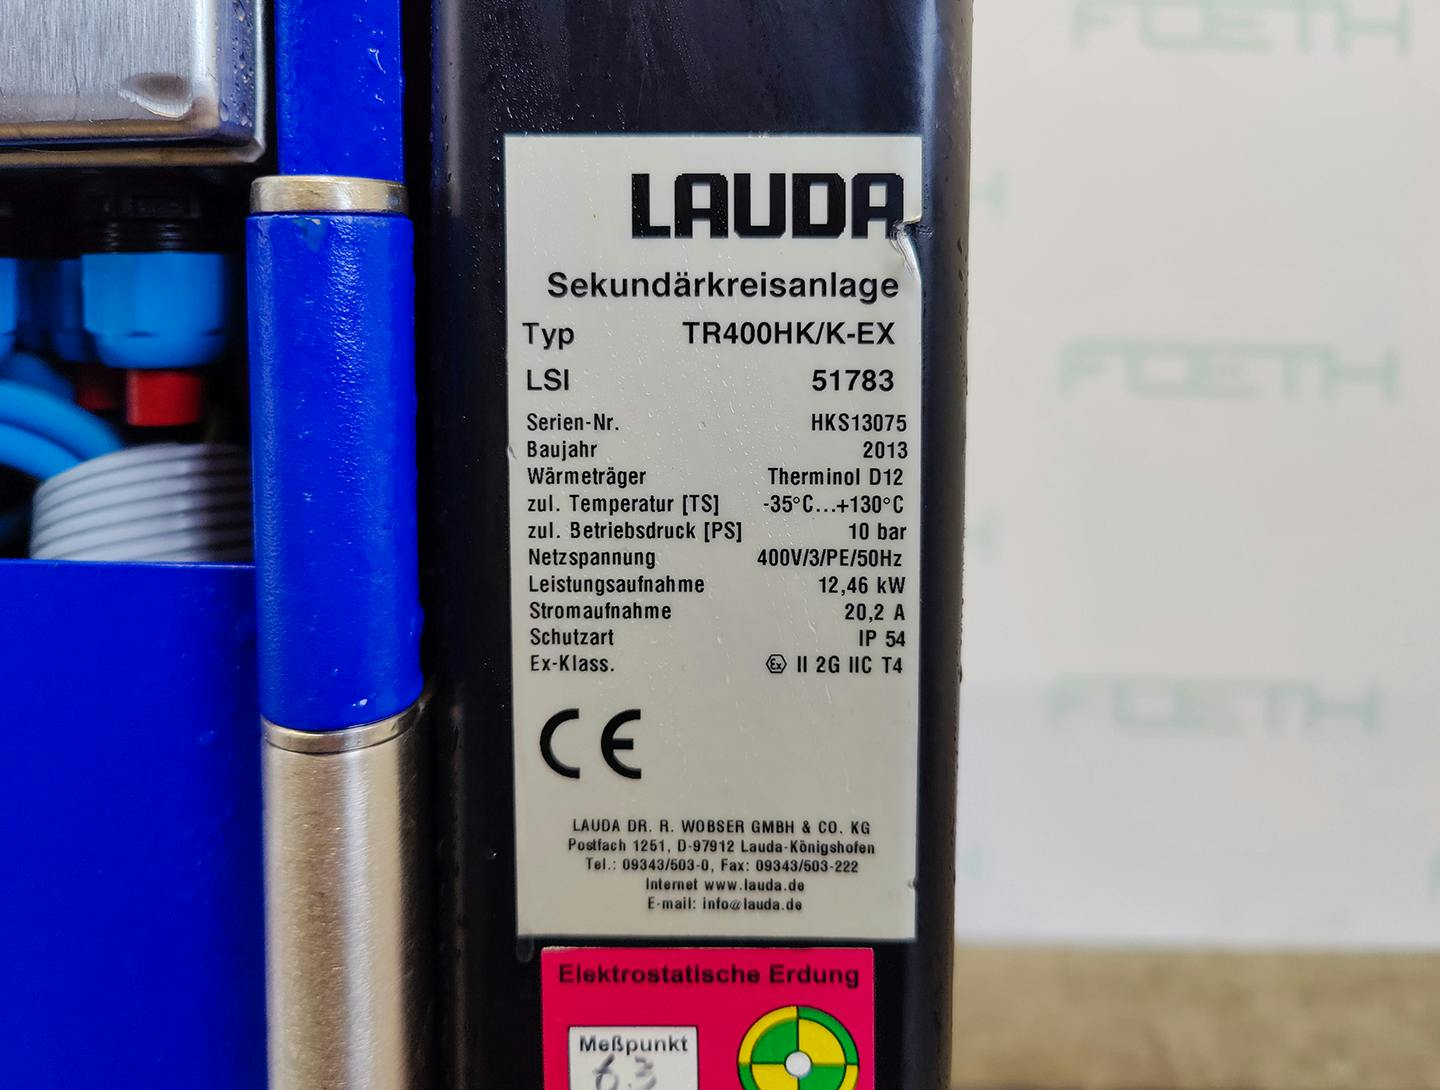 Lauda TR400 HK/K-EX "secondary circuit system" - Unità di fluido termico - image 6